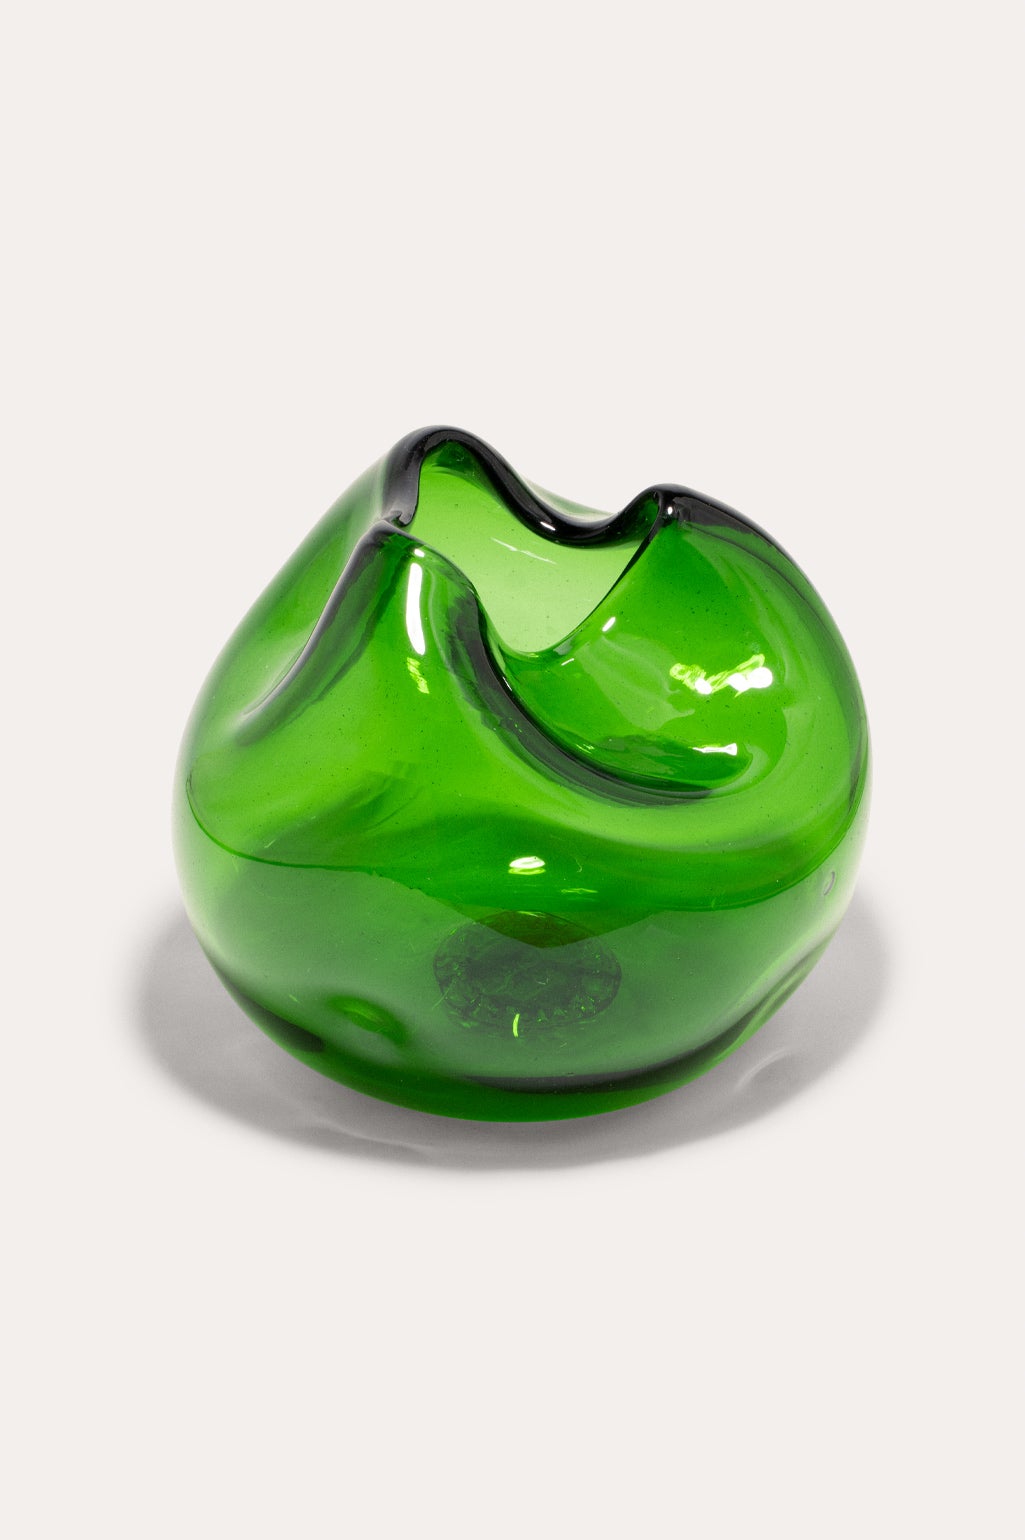 20 oz Glass Bottle w/ Texture Base  Simply + Green Solutions —  Simply+Green Solutions